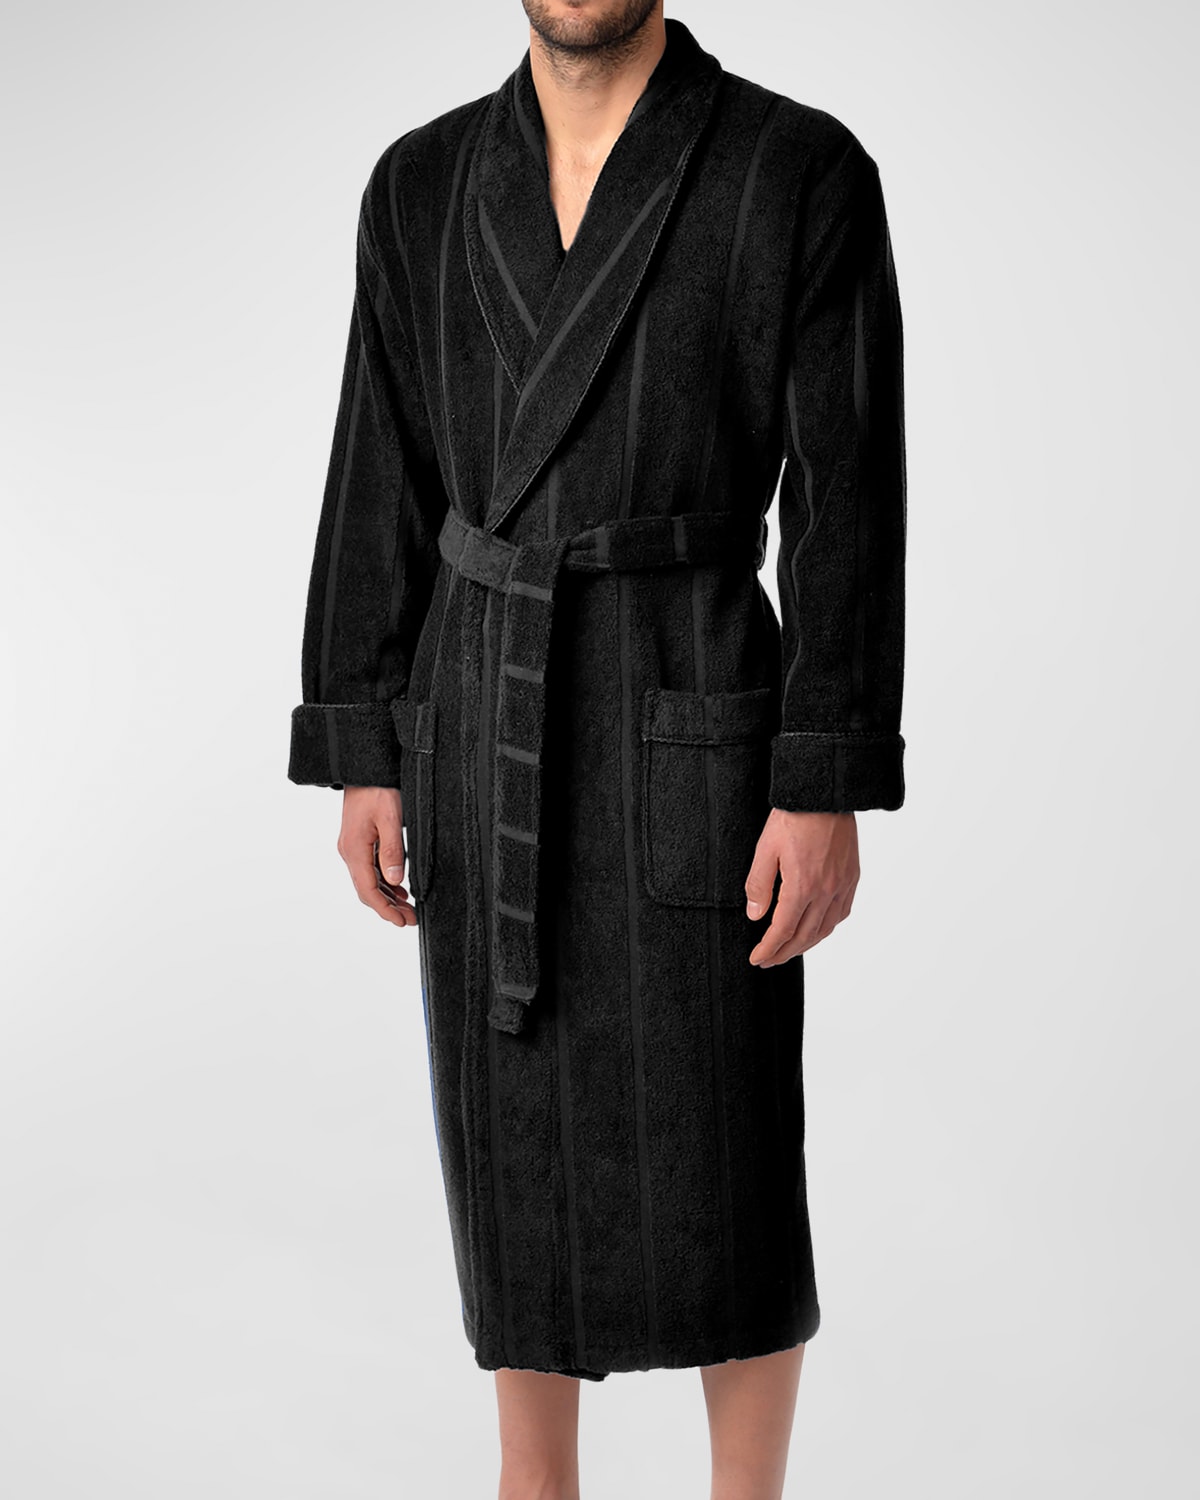 Men's Ultra Lux Jacquard Shawl Robe